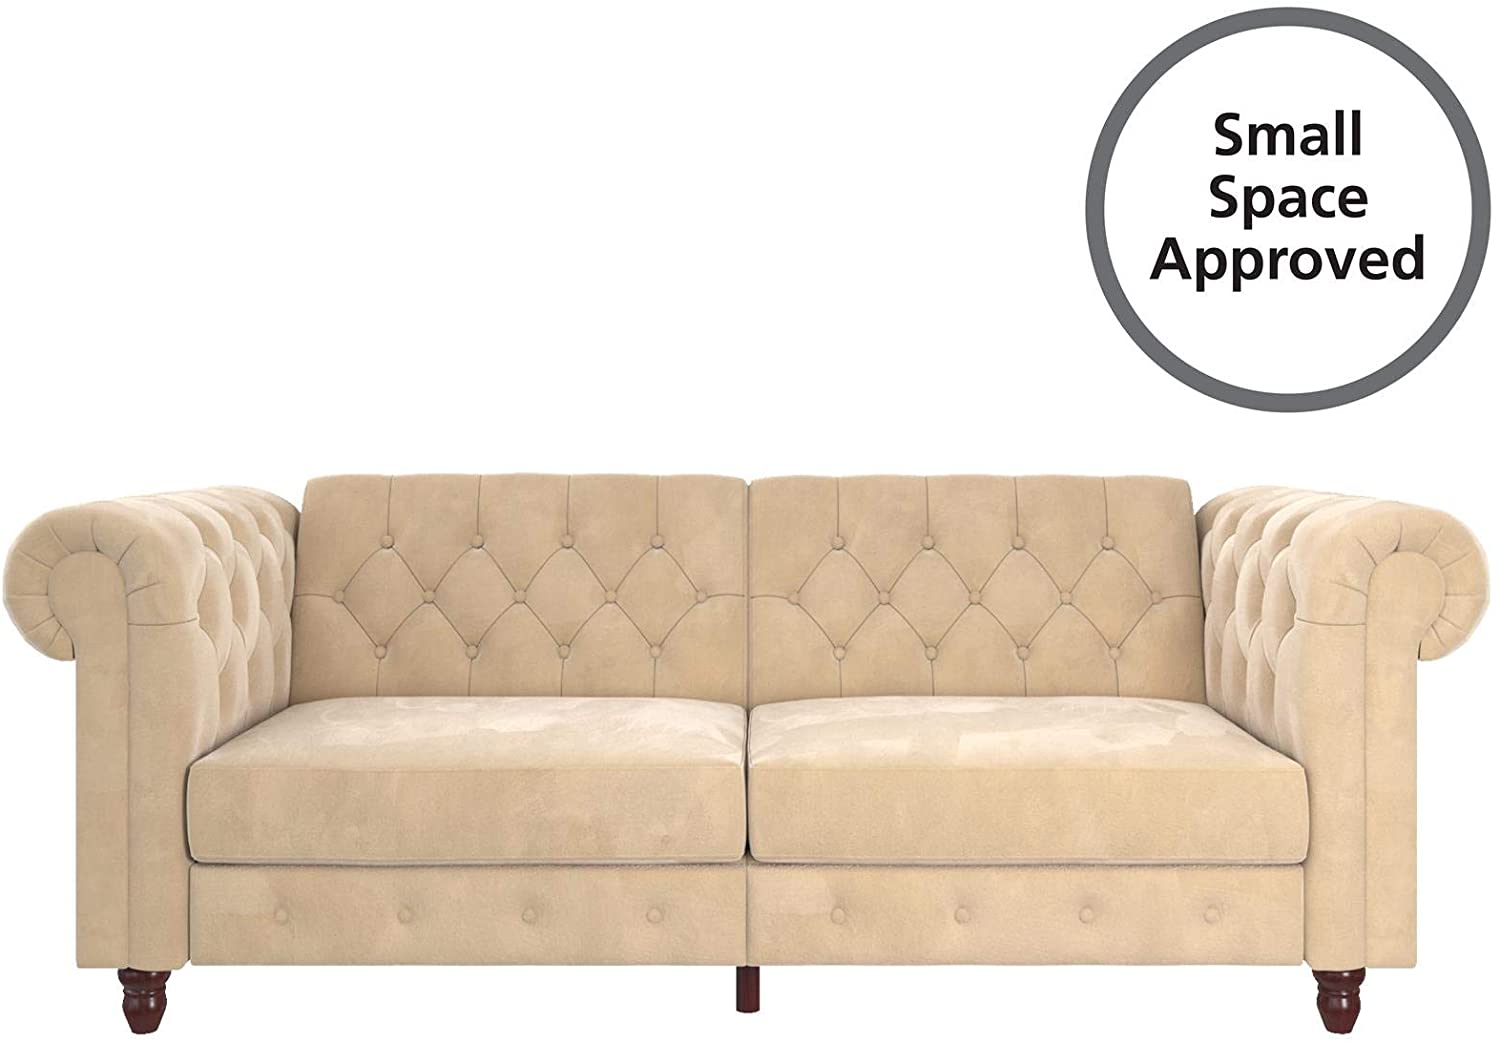 Sofa Cum Beds: Multi-Position Design